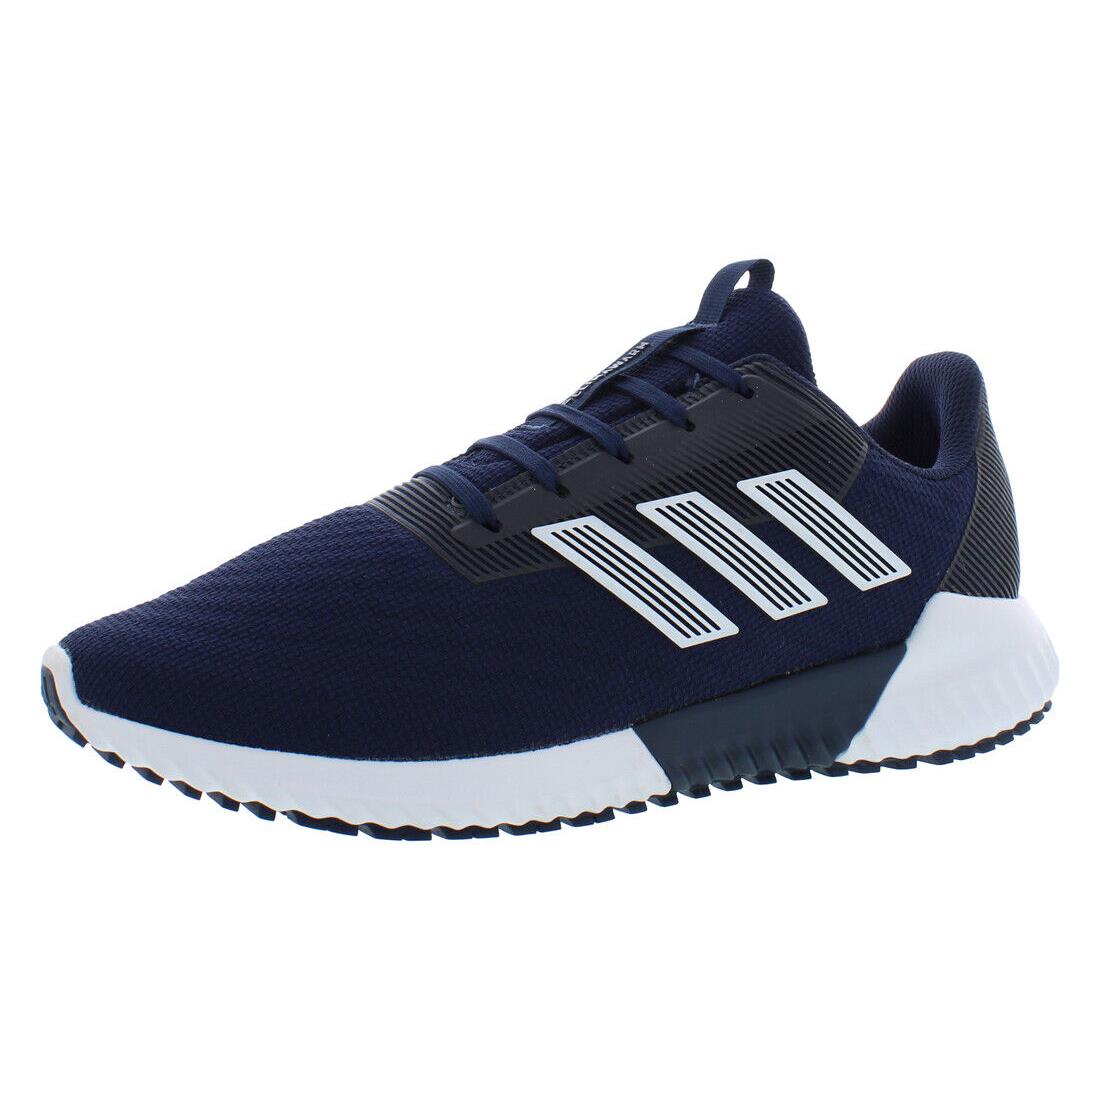 Adidas Climawarm 2.0 Mens Shoes - Navy, Main: Blue